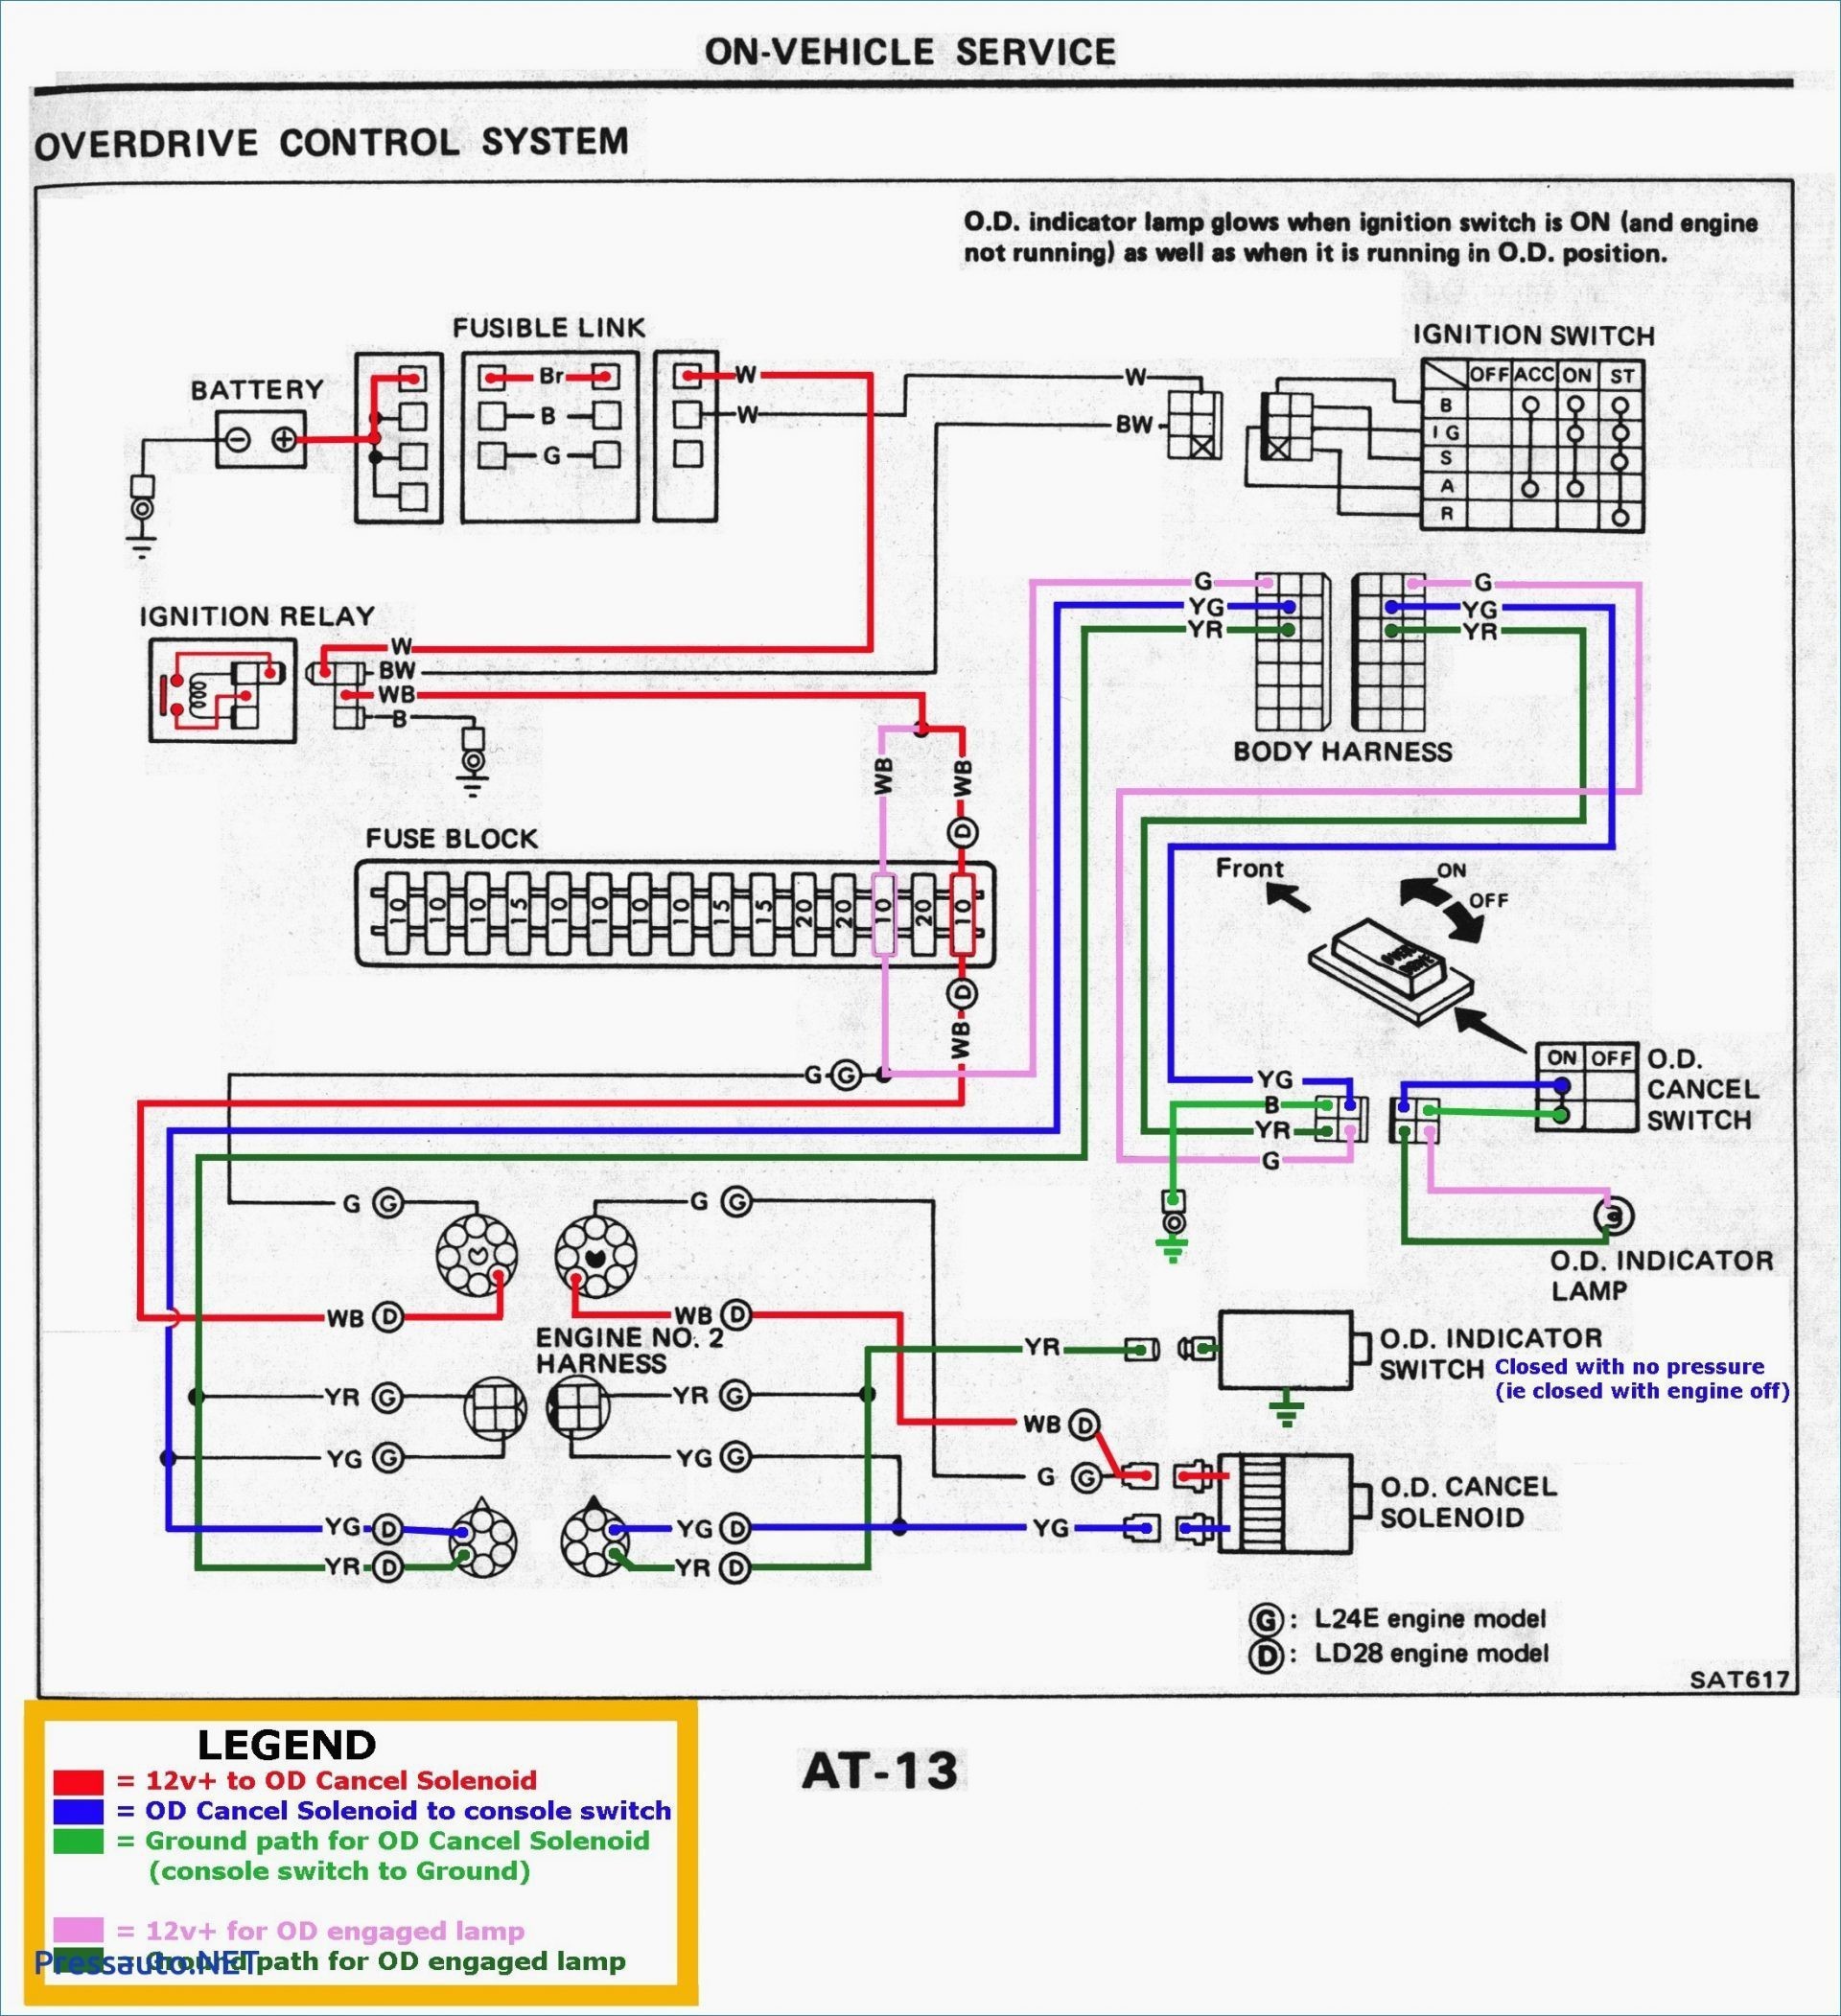 Travel Trailer Battery Wiring Diagram Best Wiring Diagram For Rv Trailer Plug Print Wiring Diagram Rv Trailer